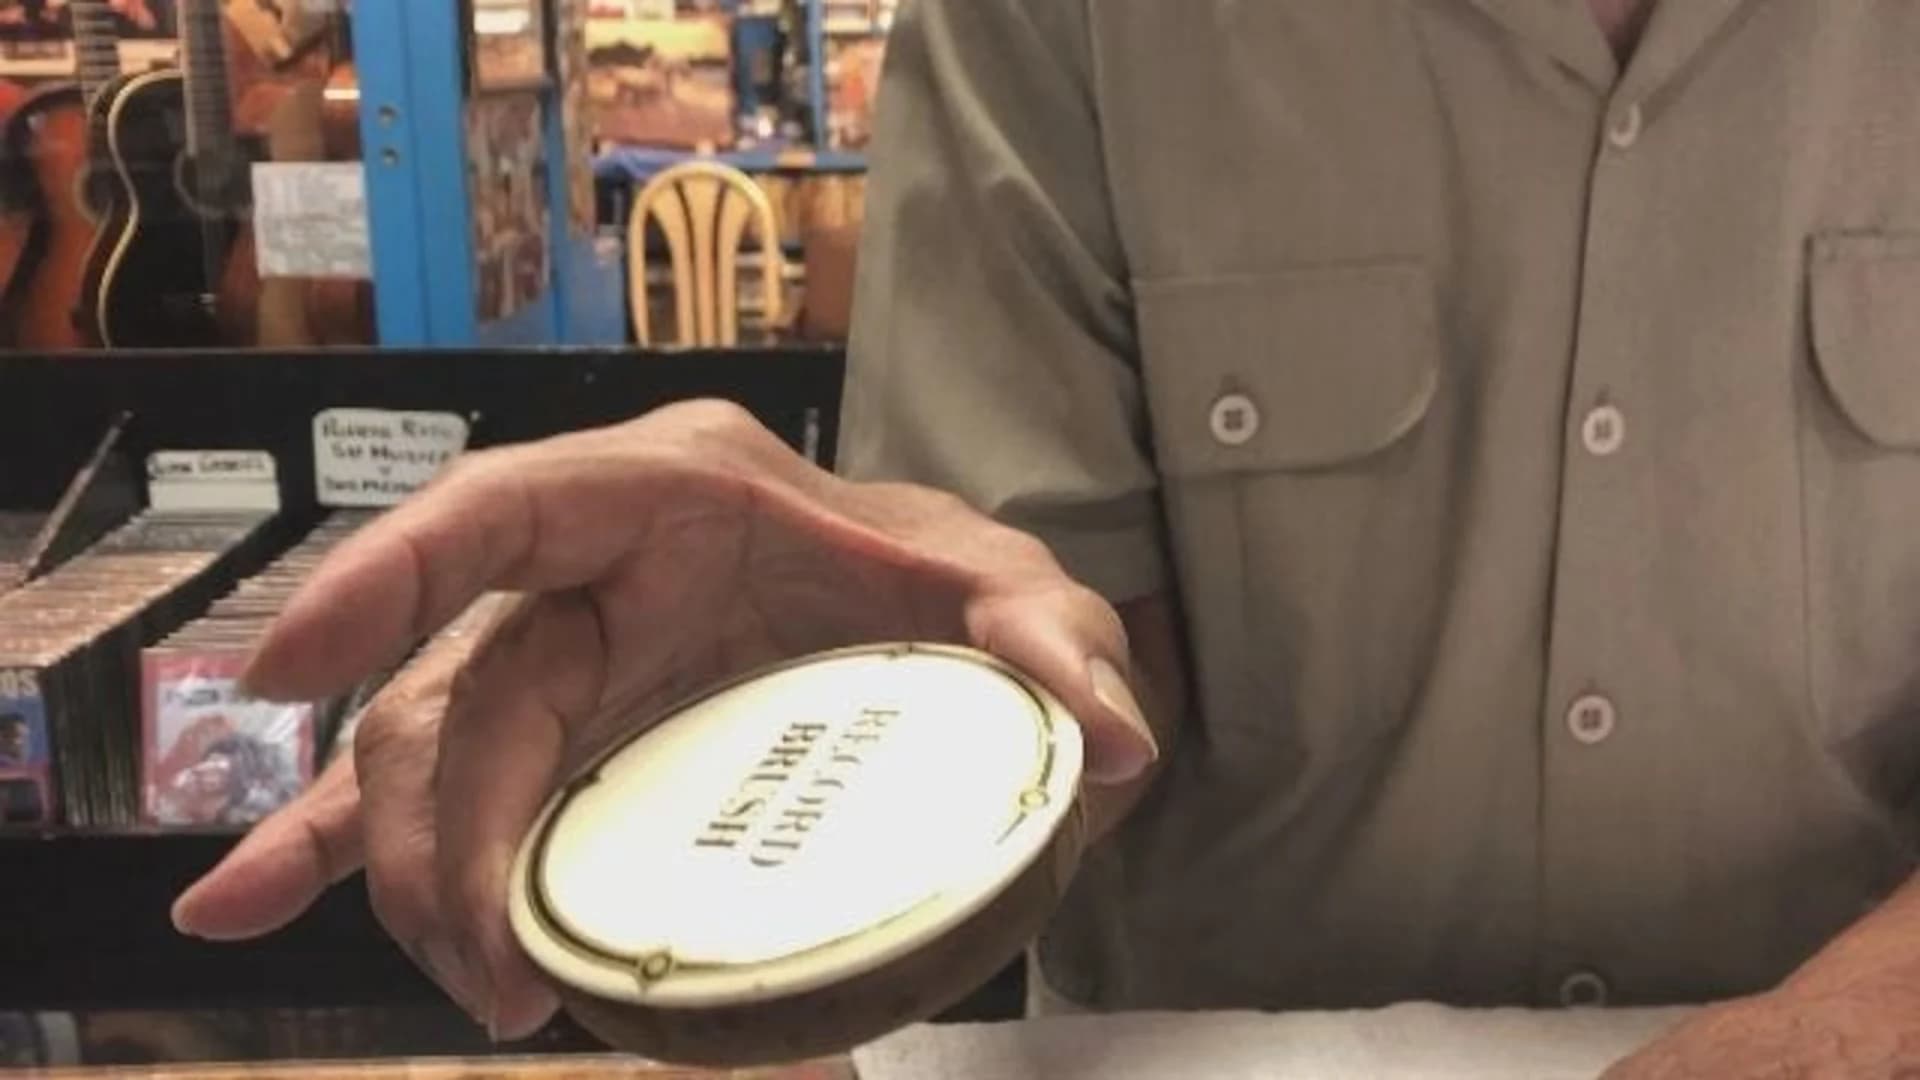 Latin music store owner shows off memorabilia